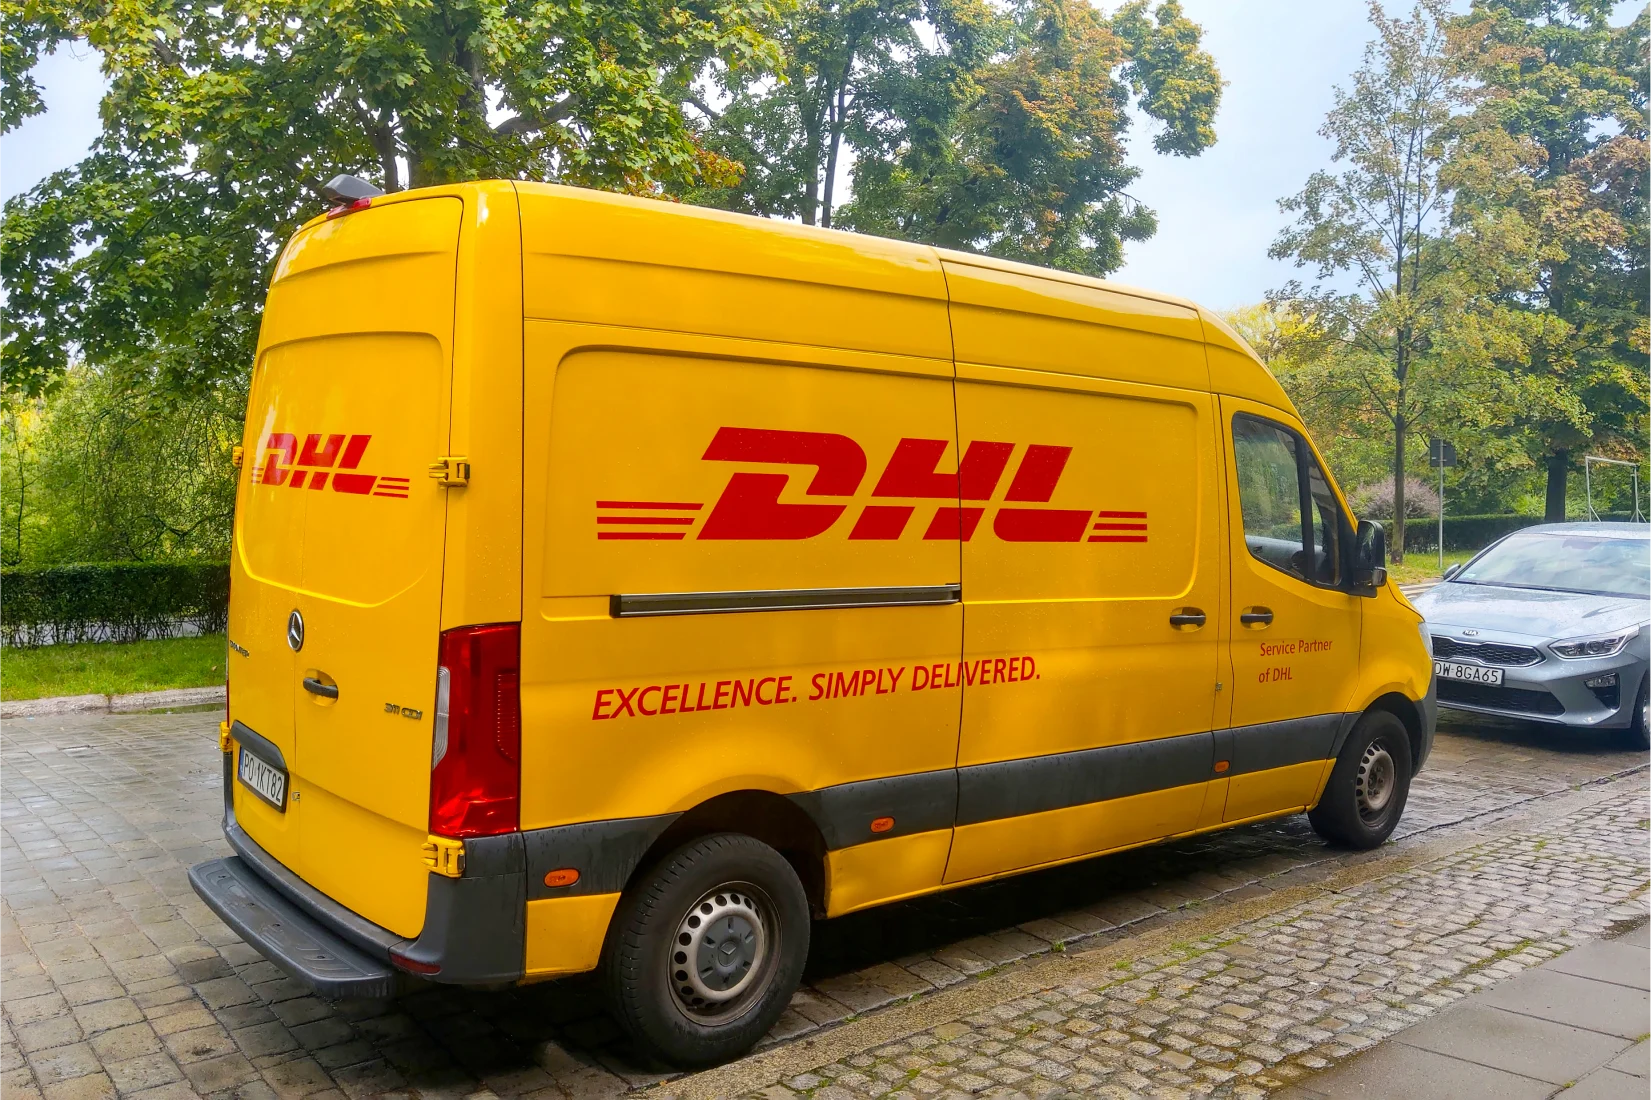 Parked DHL delivery van